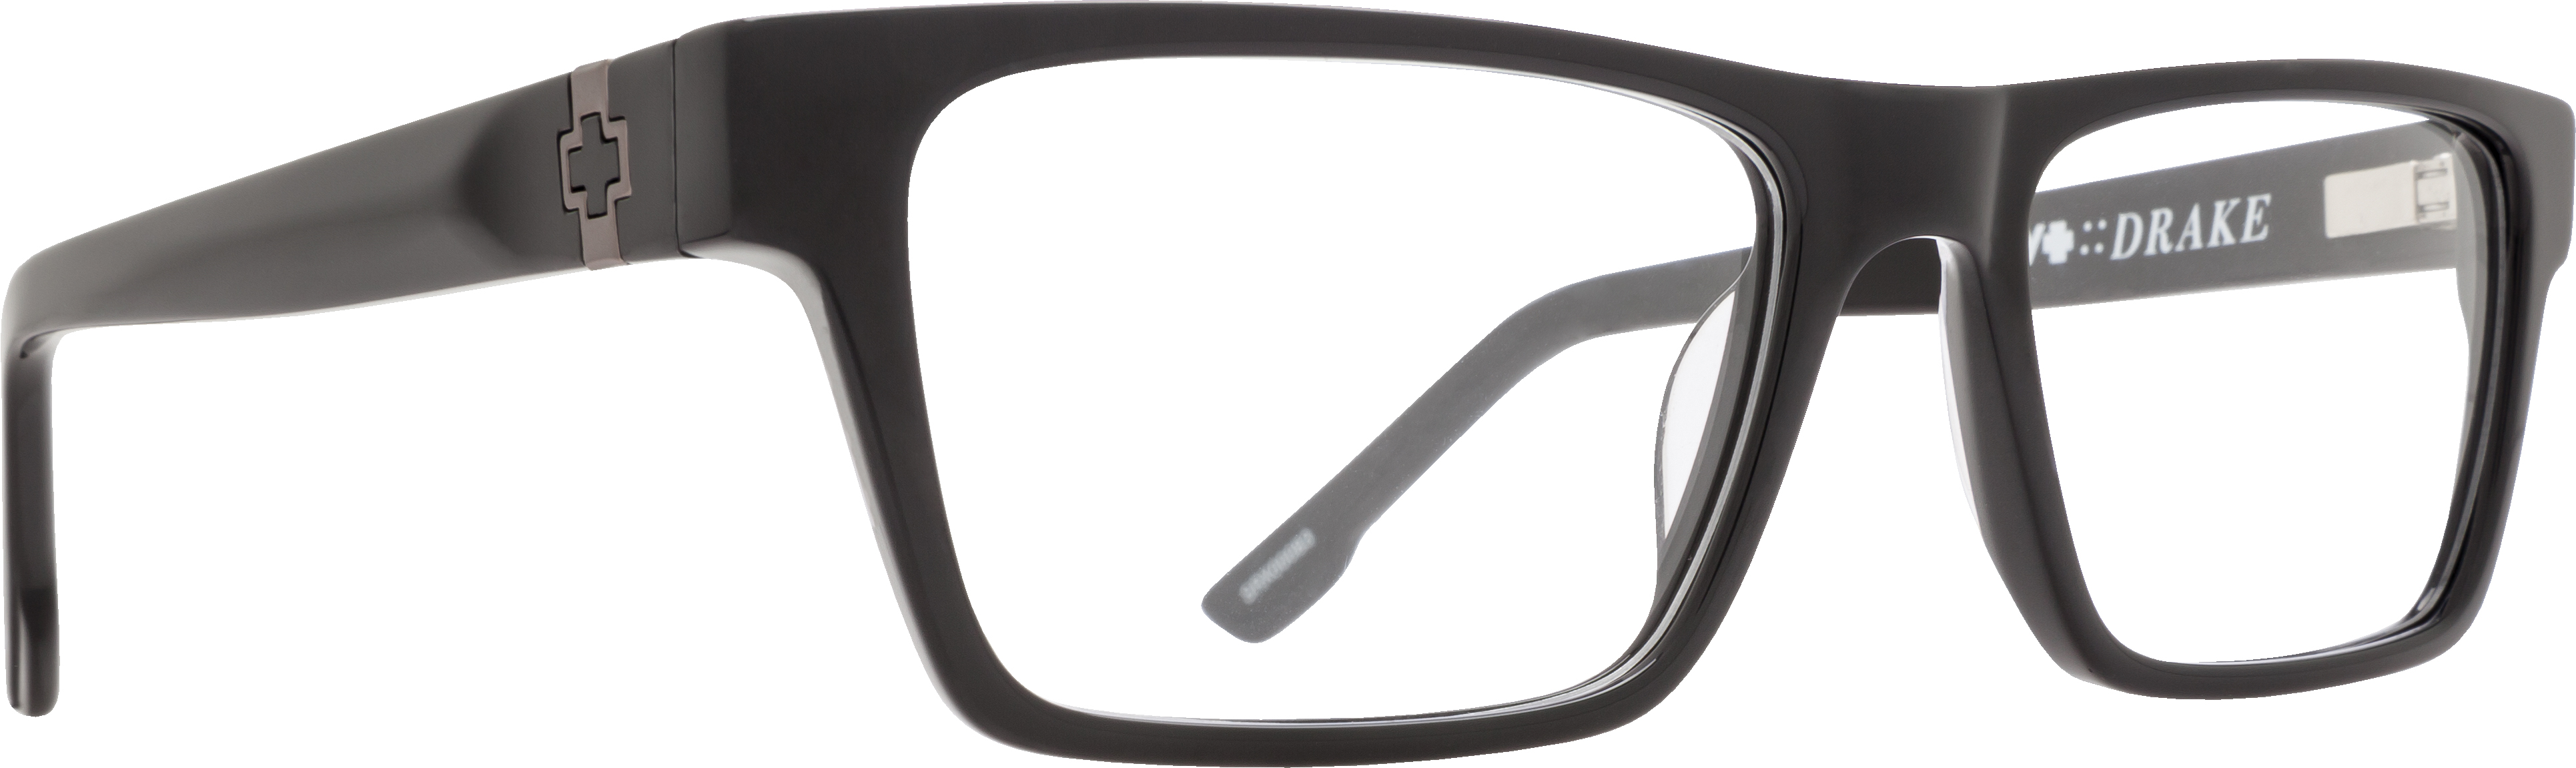 Picture of Spy Eyeglasses DRAKE